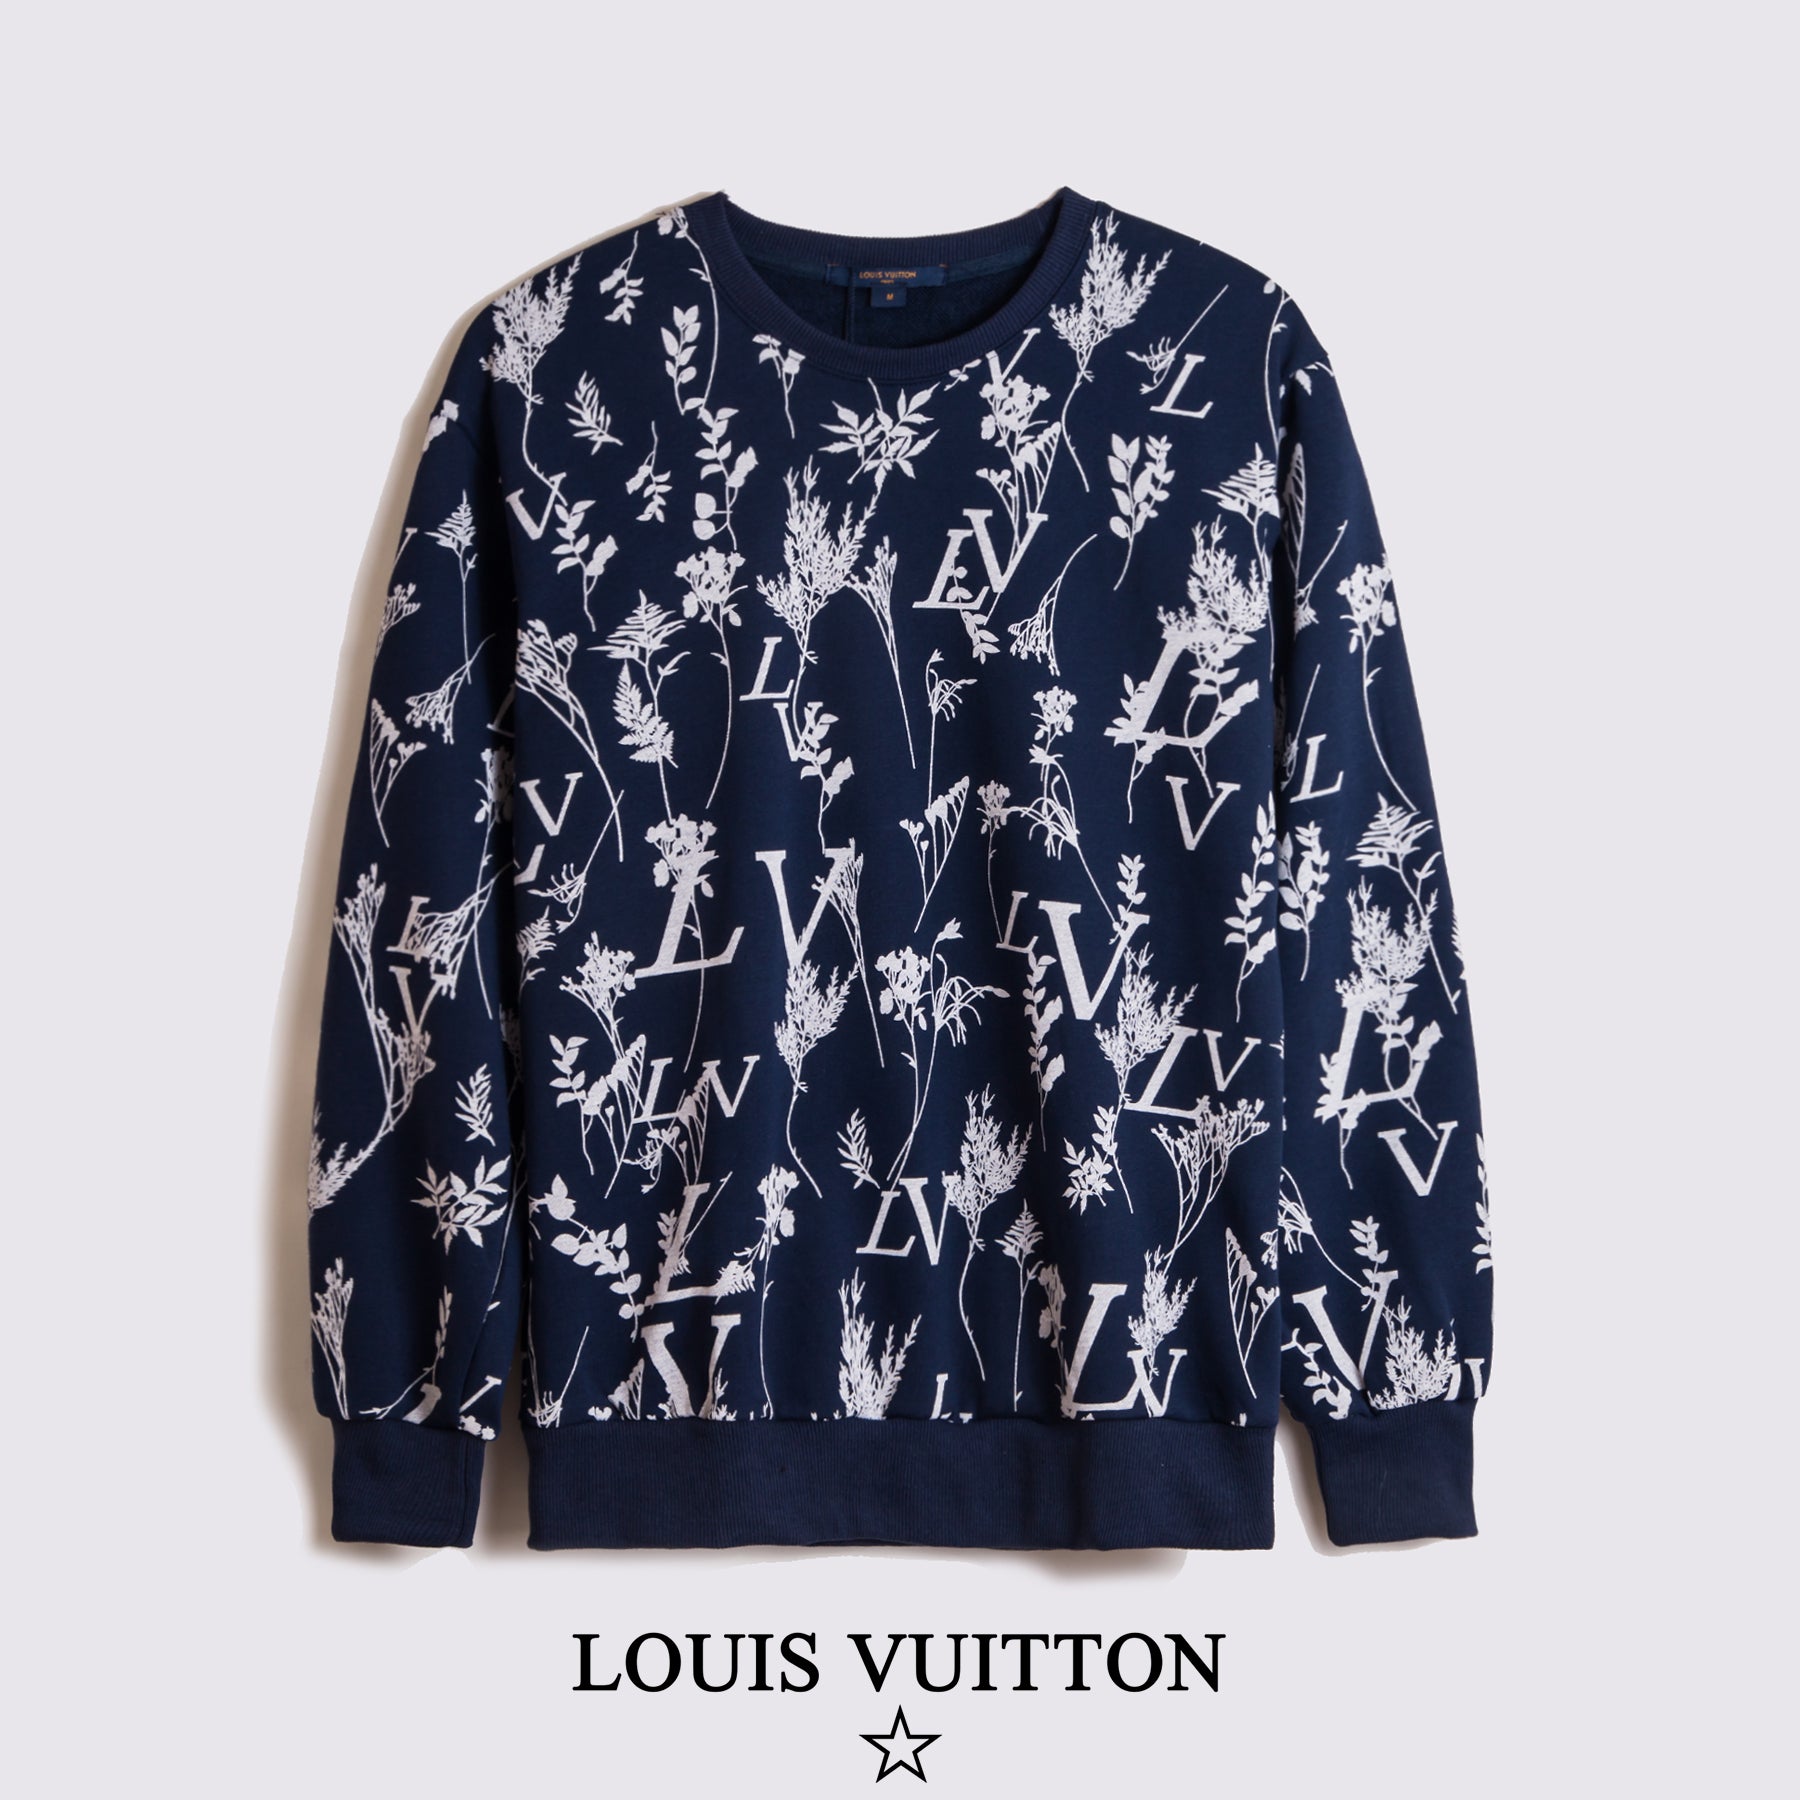 Louis Vuitton Sweatshirt